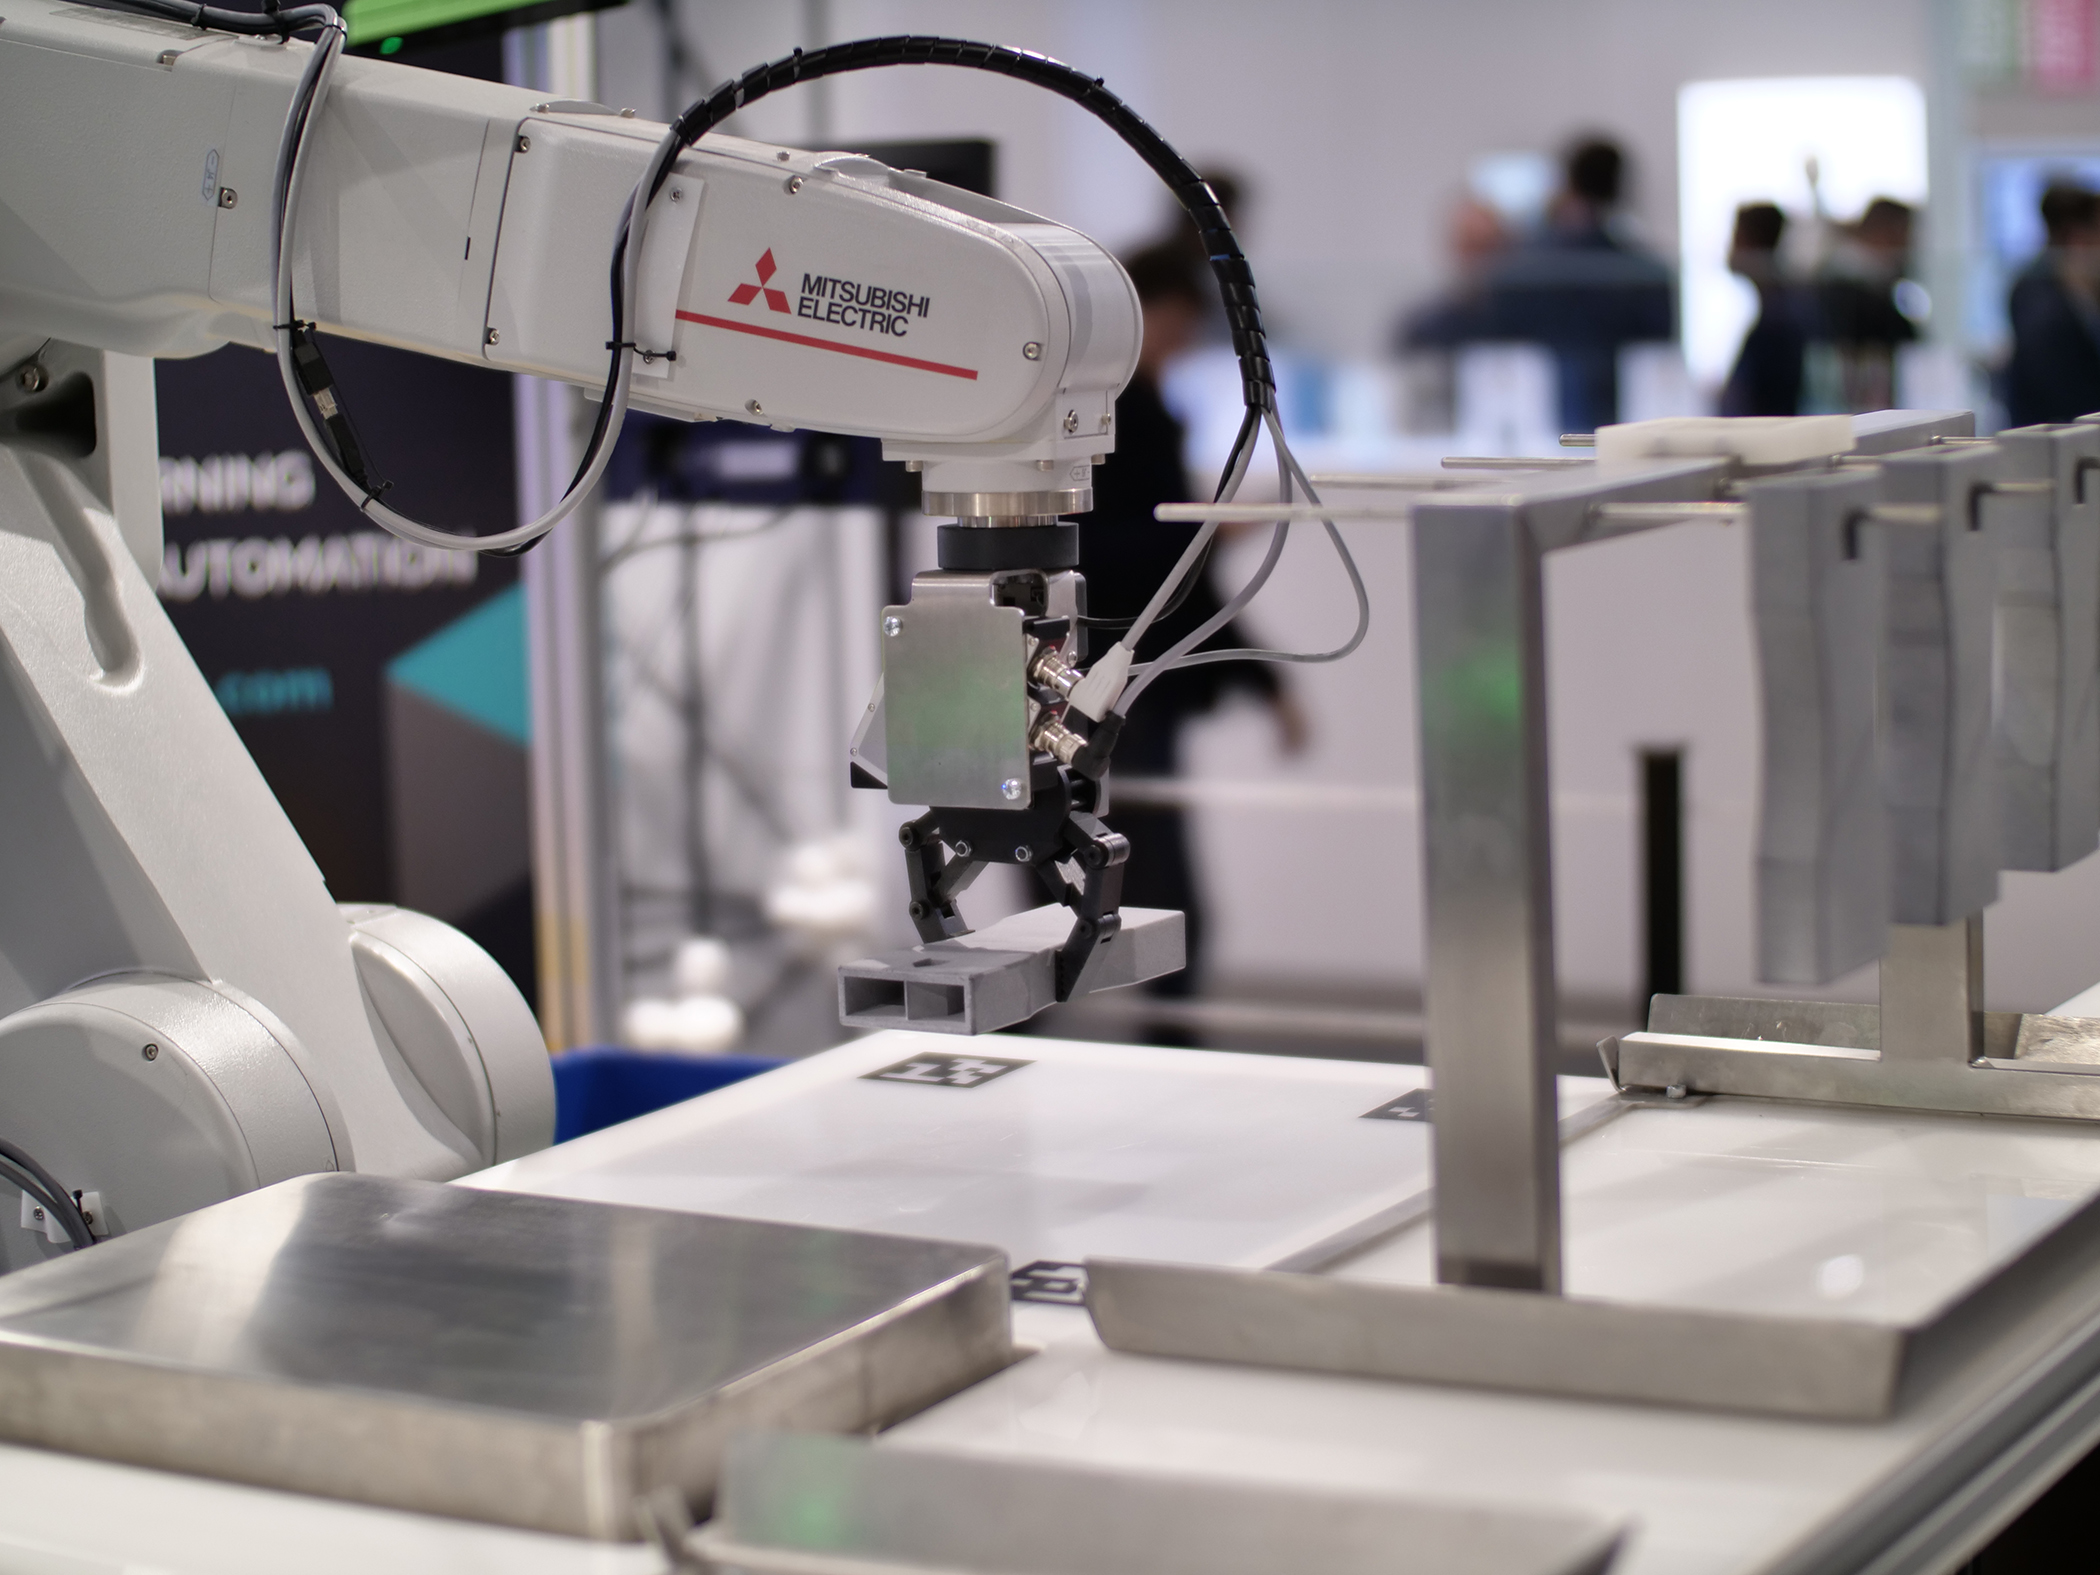 AMT’s Mitsubishi robot live in action at Formnext 2019. [Source: AMT]